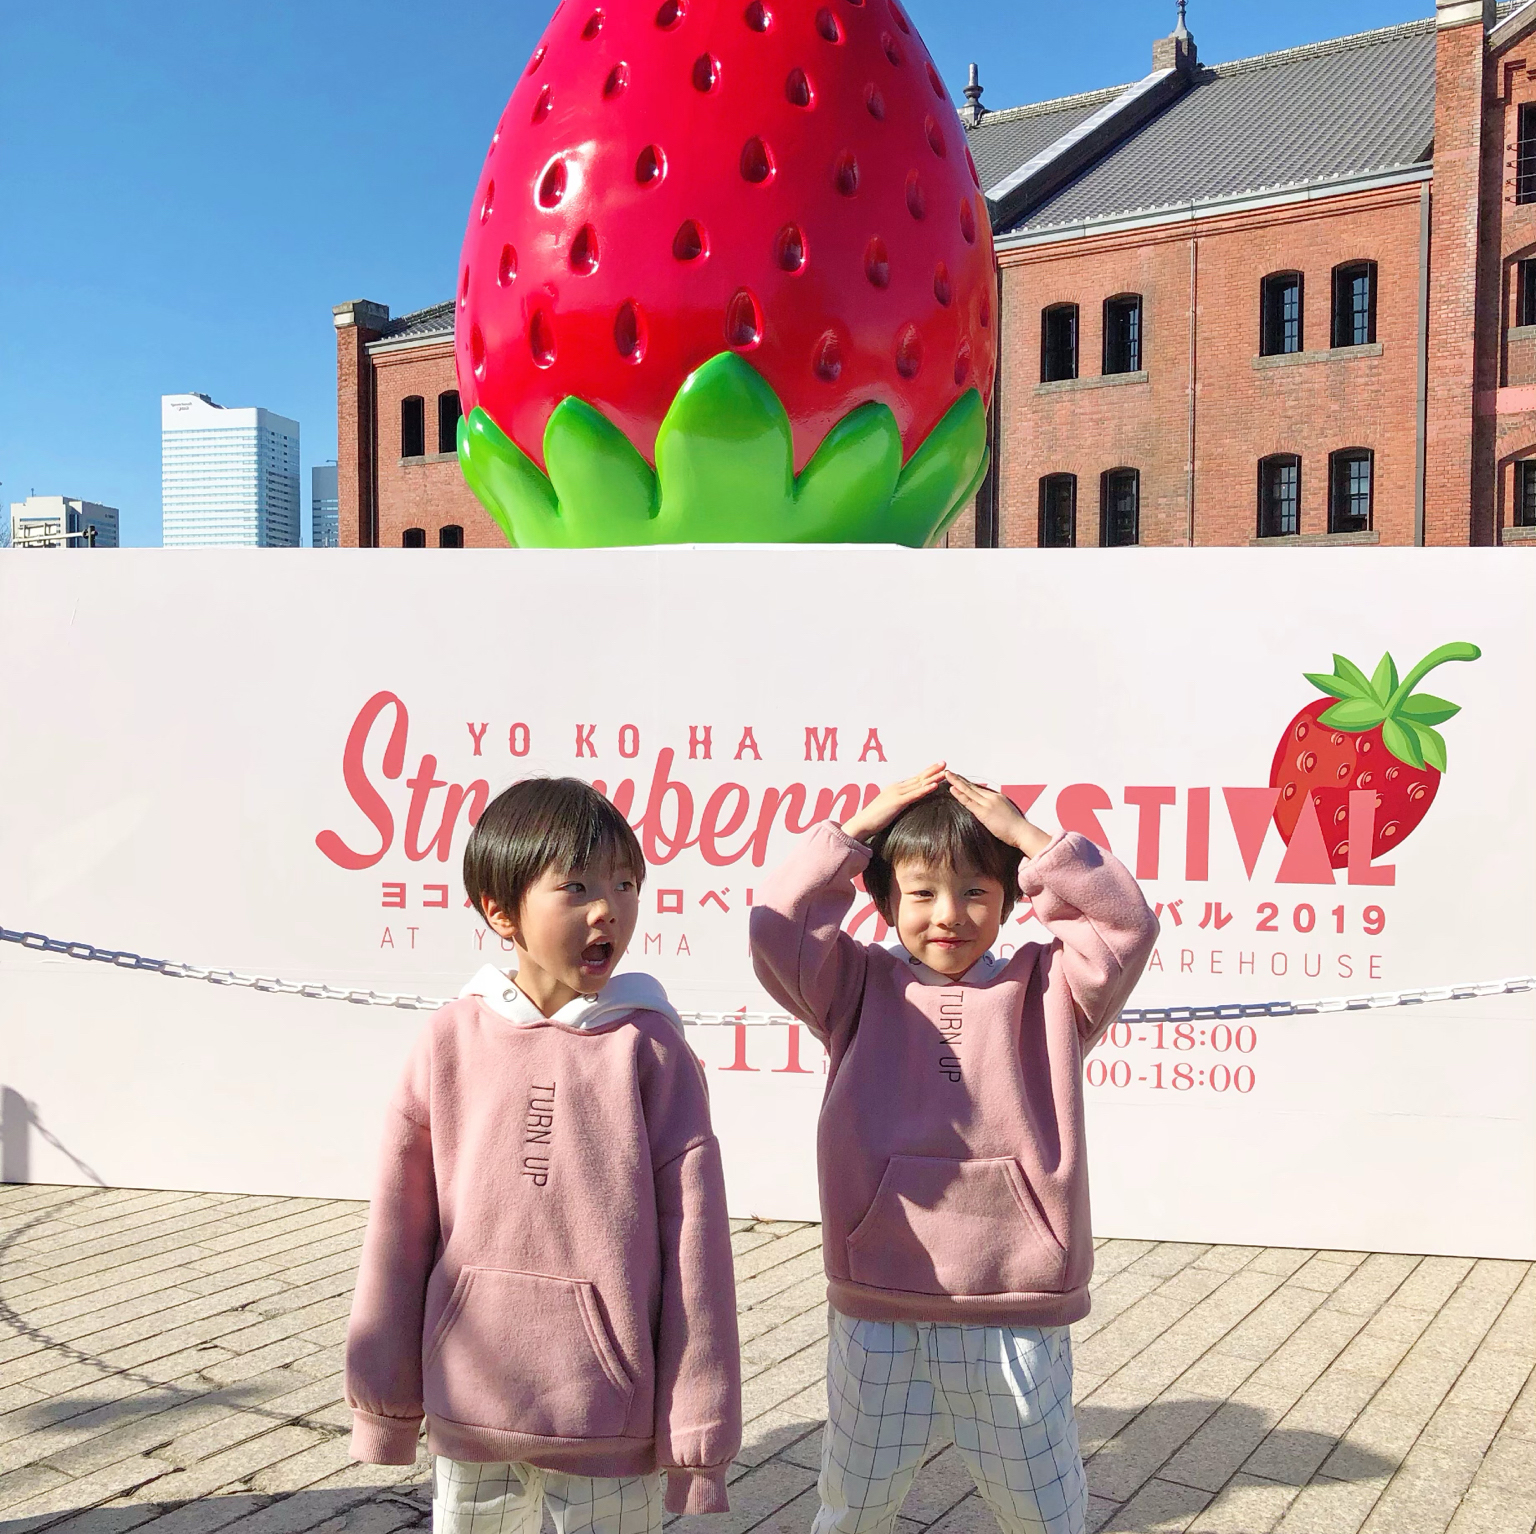 Yokohama strawberry festival